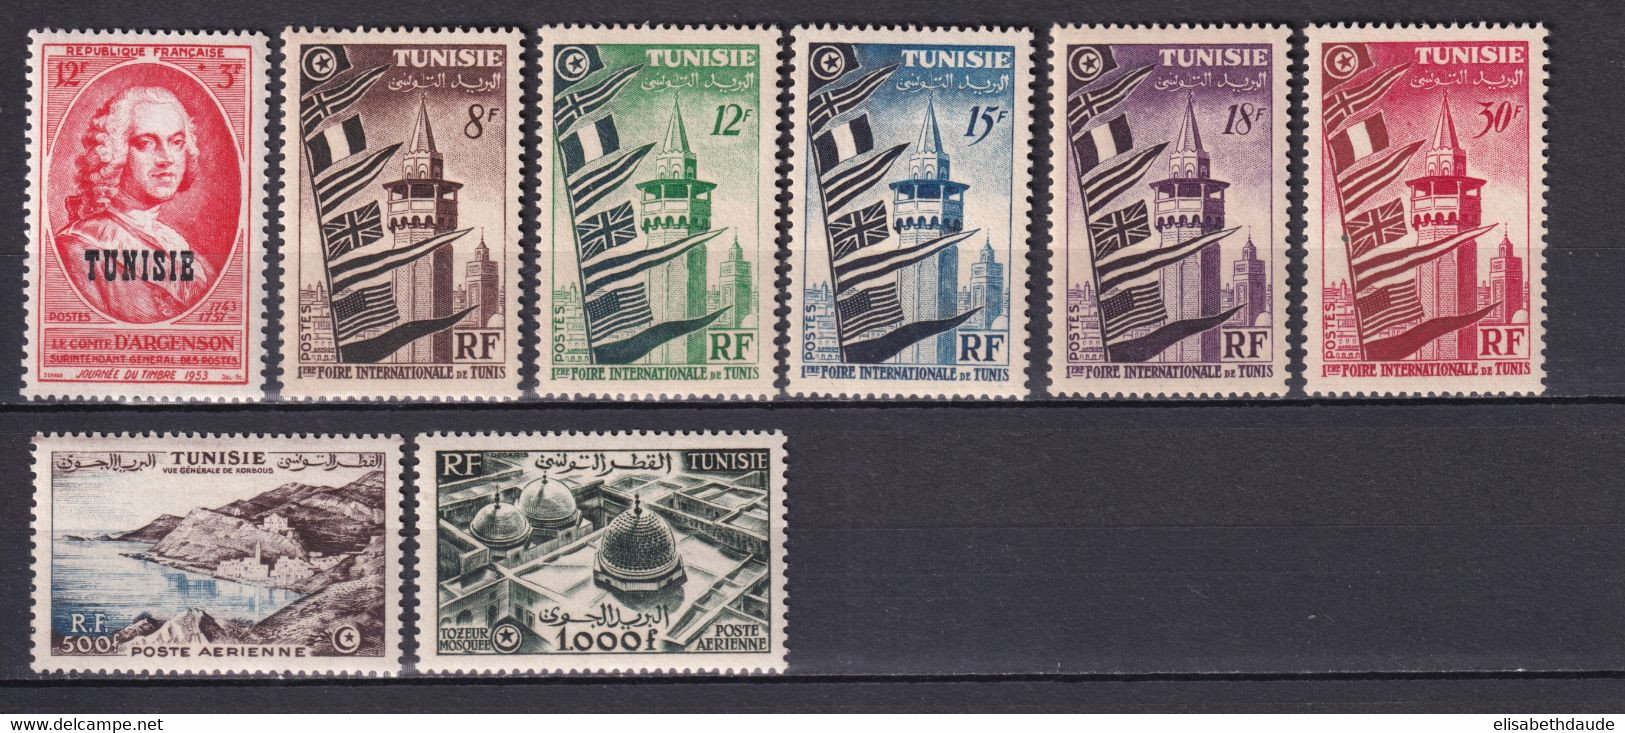 TUNISIE - 1953 - ANNEE COMPLETE AVEC POSTE AERIENNE - YVERT N° 359/364 +A18/19 * MLH - COTE = 111 EUR. - Neufs